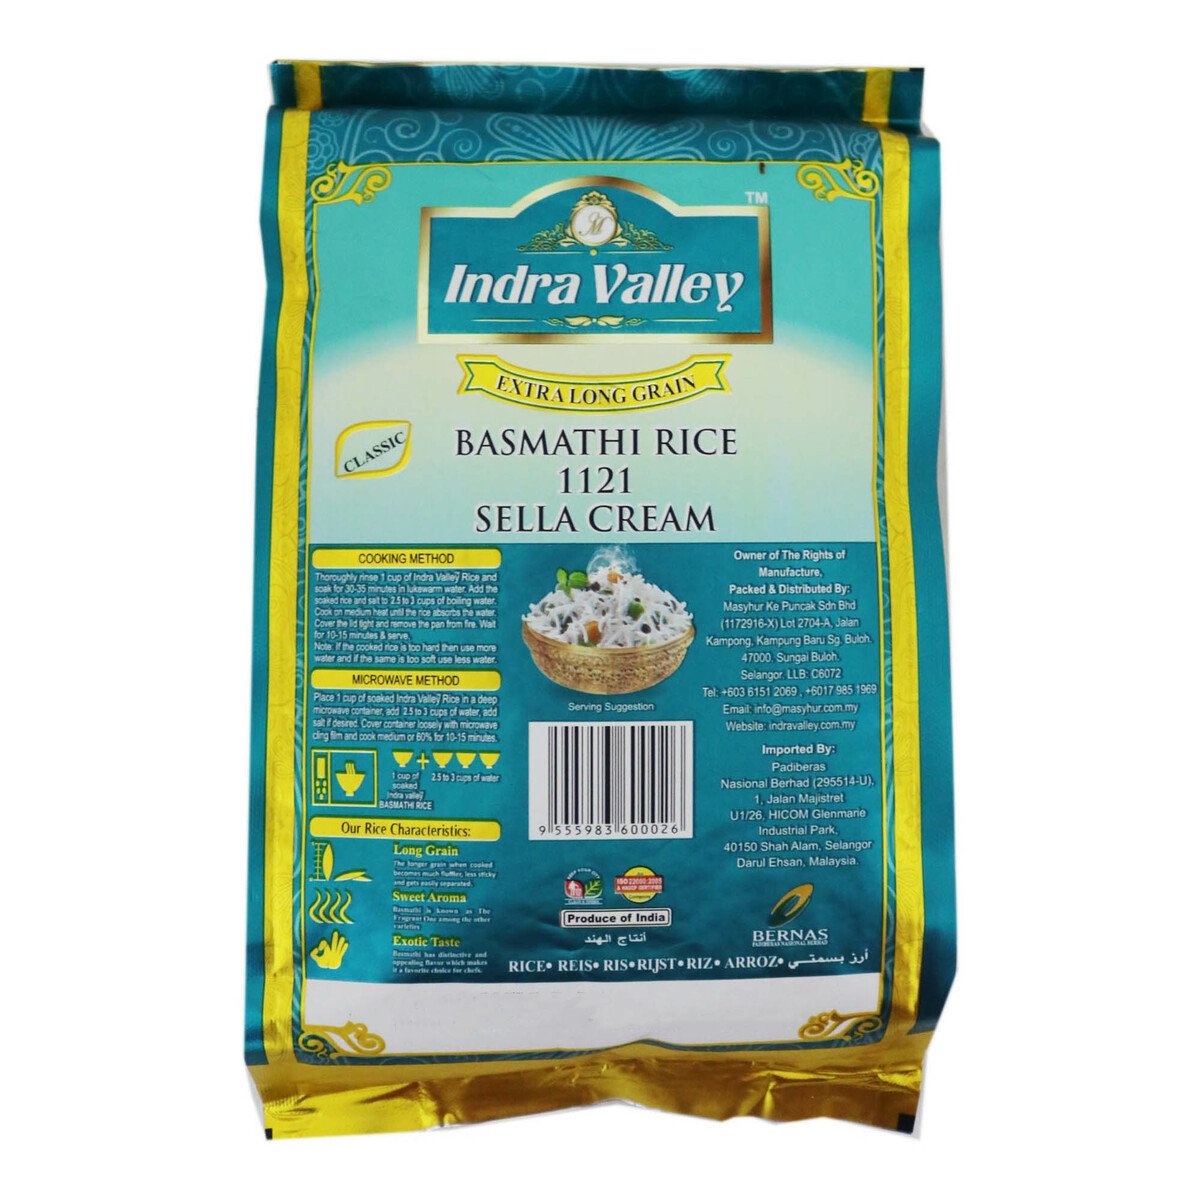 Indra Vally Basmathi Rice Pusa 1121 Sella Cream 1kg